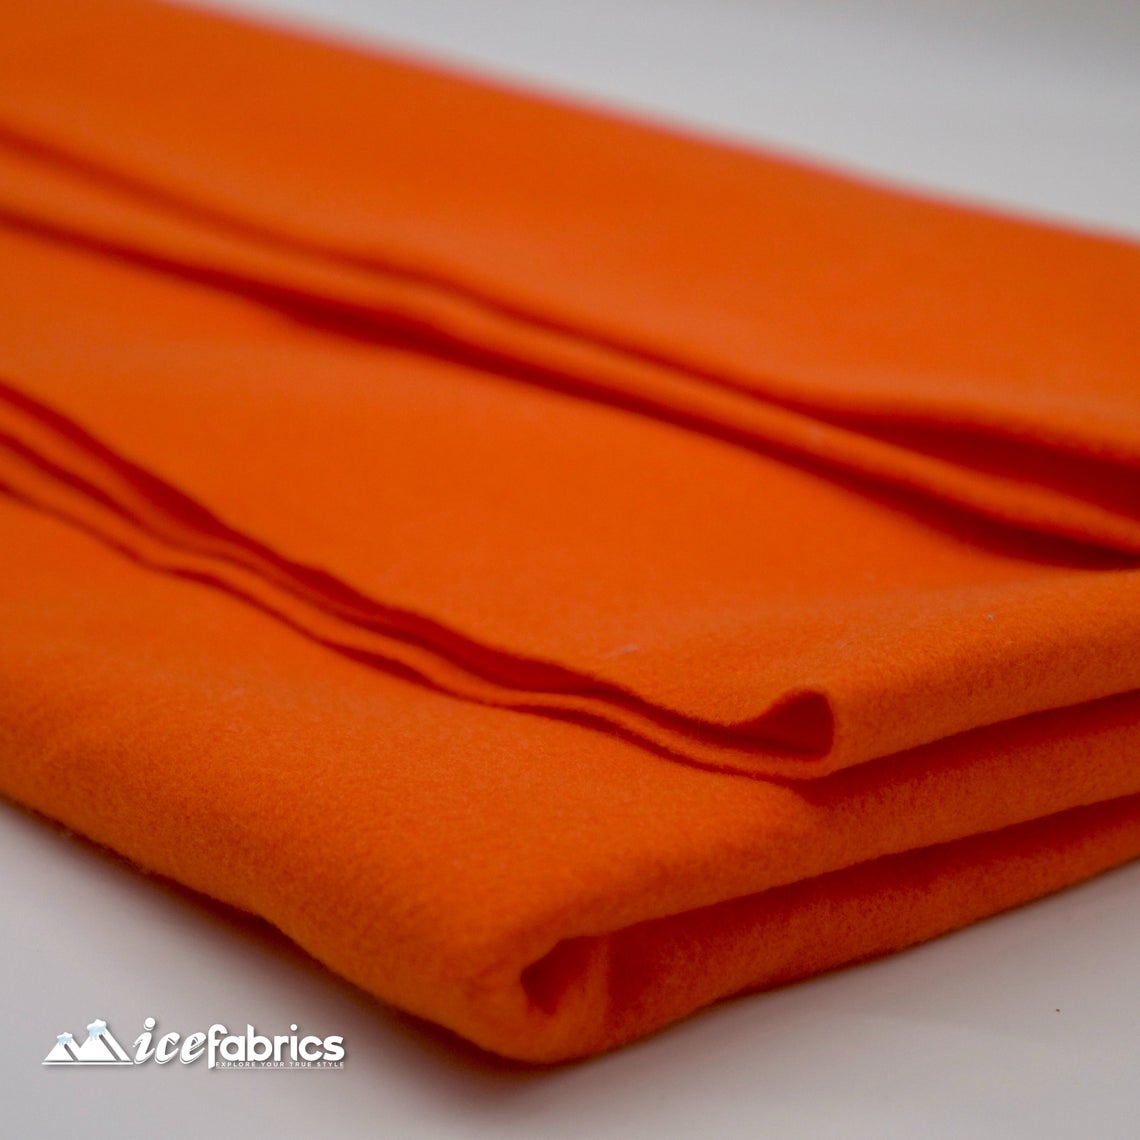 Acrylic Felt Fabric By The Roll | 20 yards | Wholesale Fabric ICE FABRICS Orange